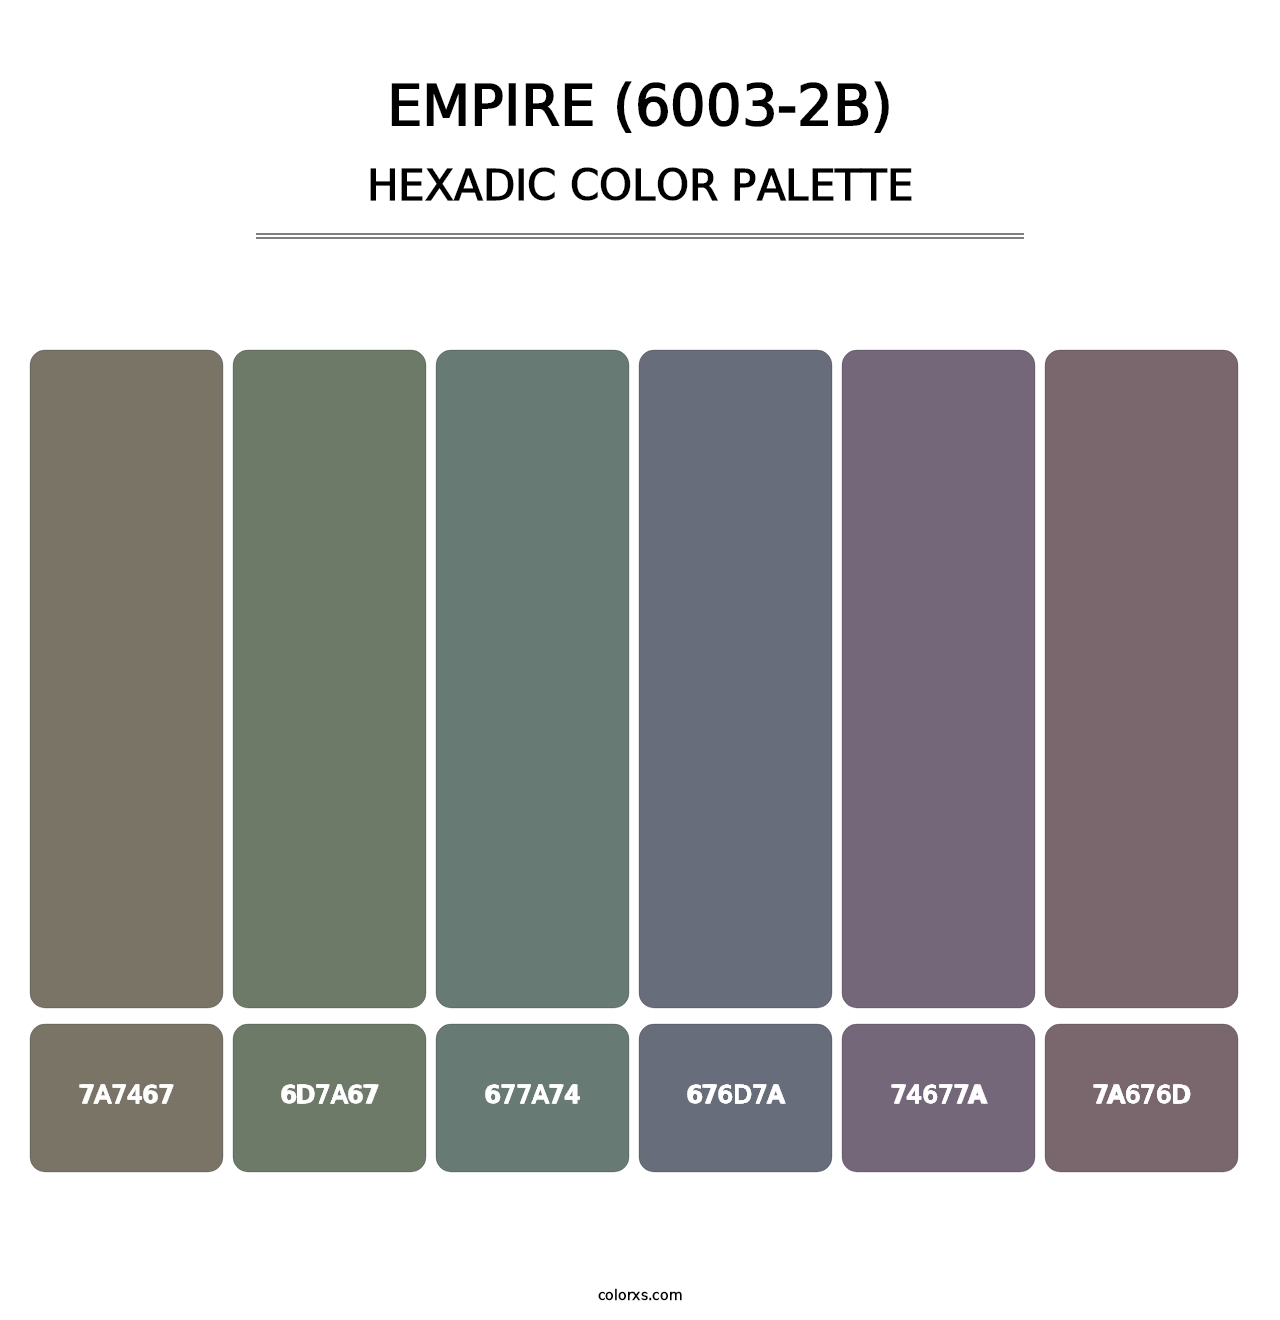 Empire (6003-2B) - Hexadic Color Palette